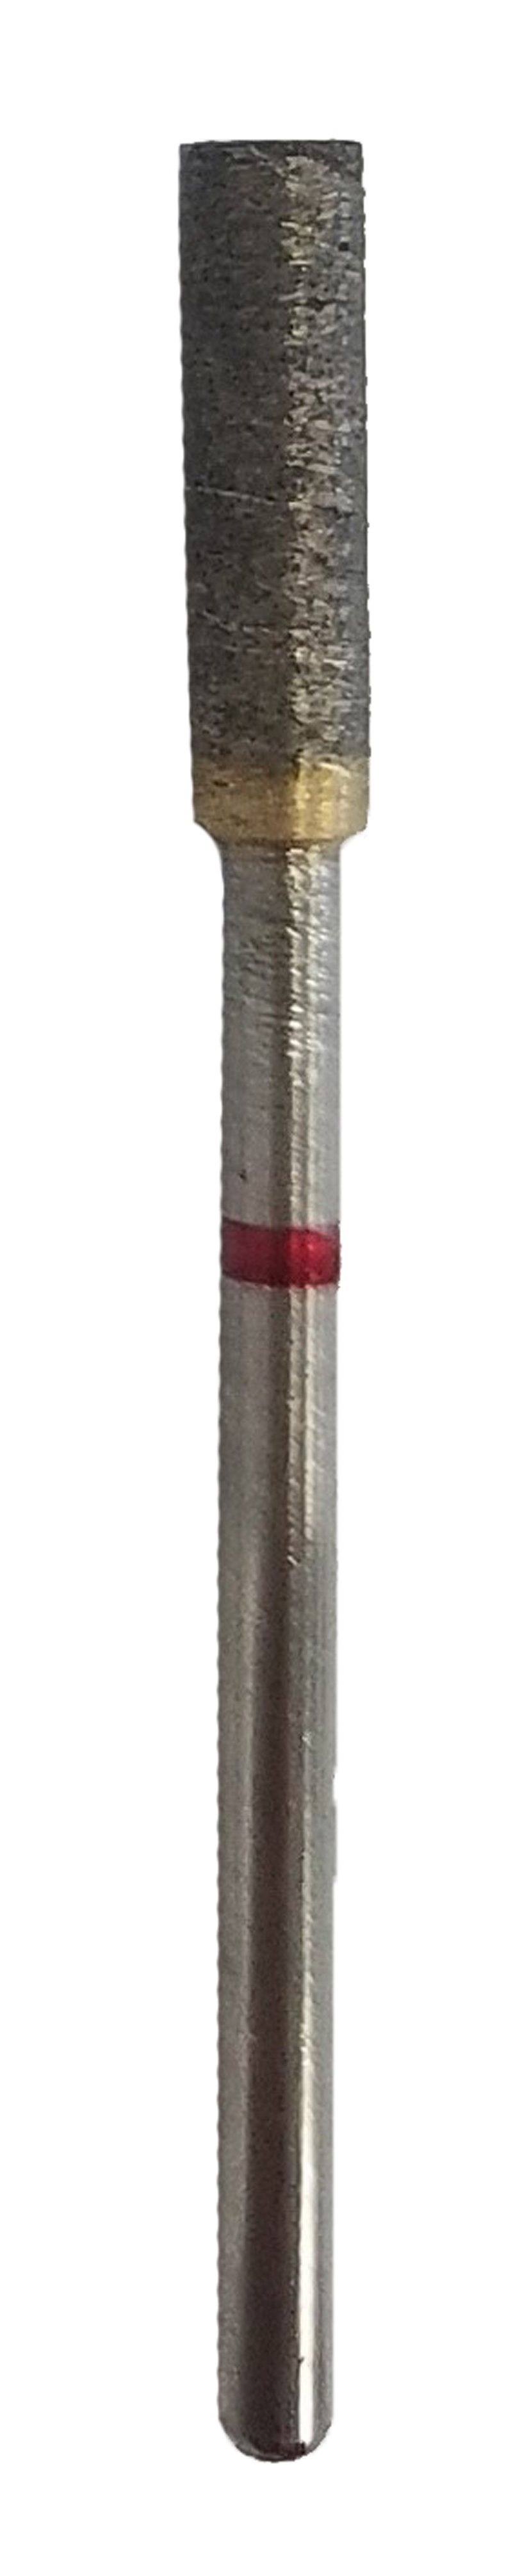 DIAMOND BUR, SINTERED, X-fine 600 grit 2.34mm mandrel(hp),Small CYLINDER, 5.4mm W X 13mm H